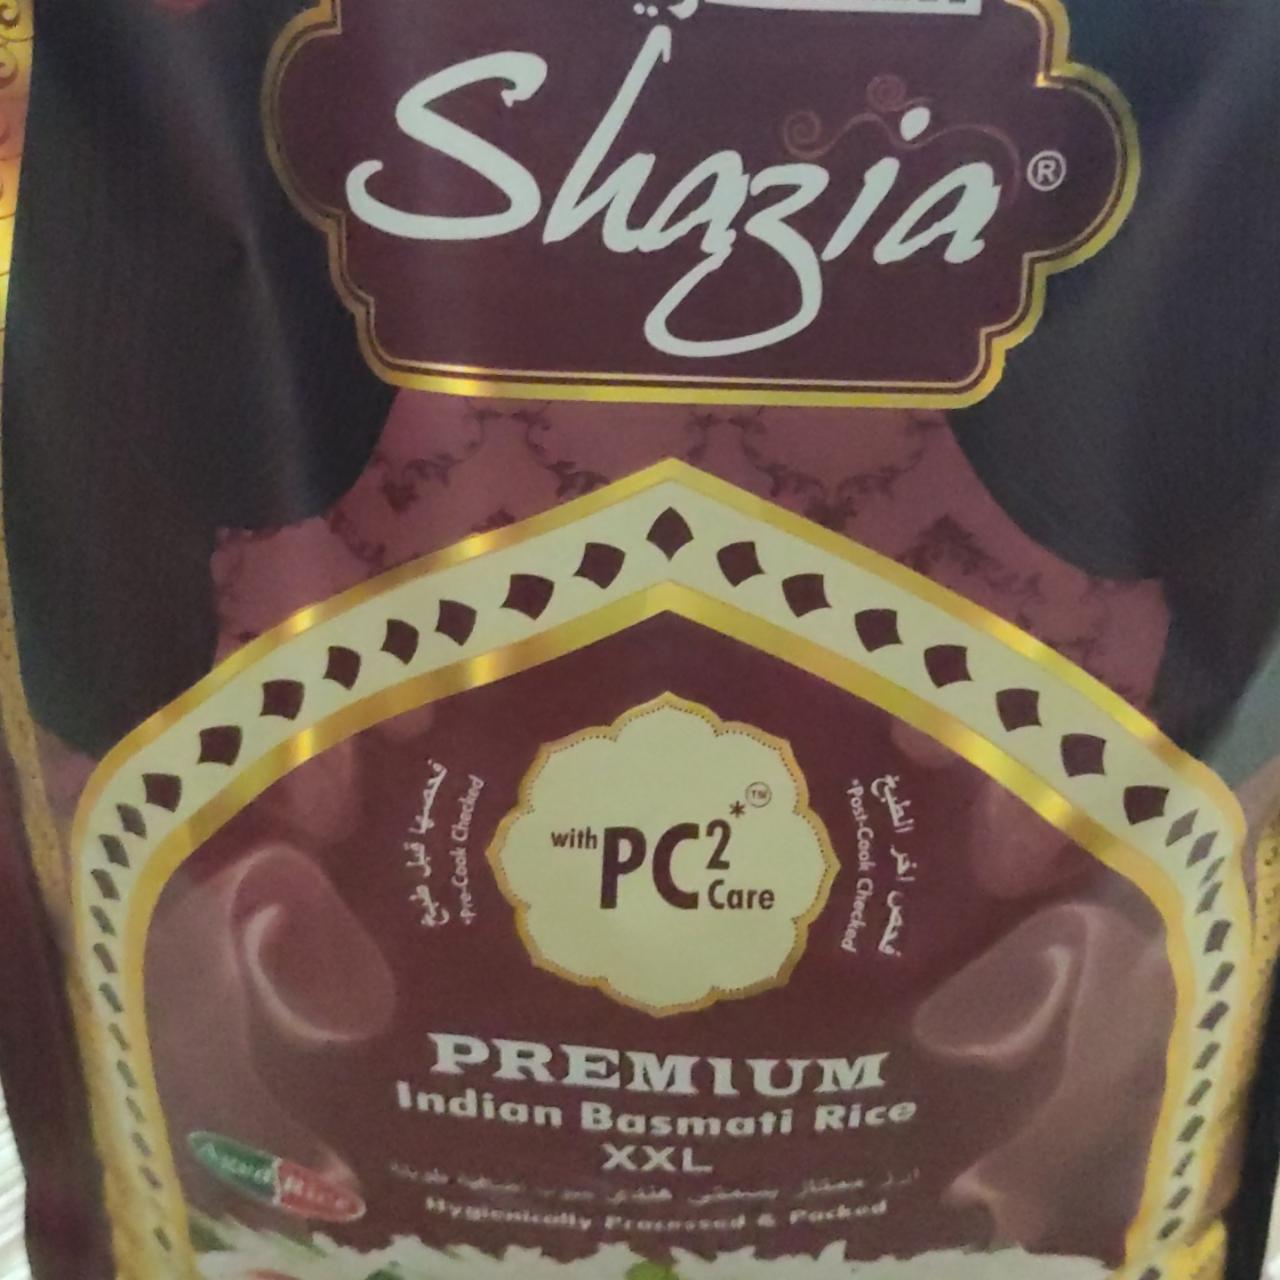 Fotografie - Premium Indian Basmati Rice Shazia